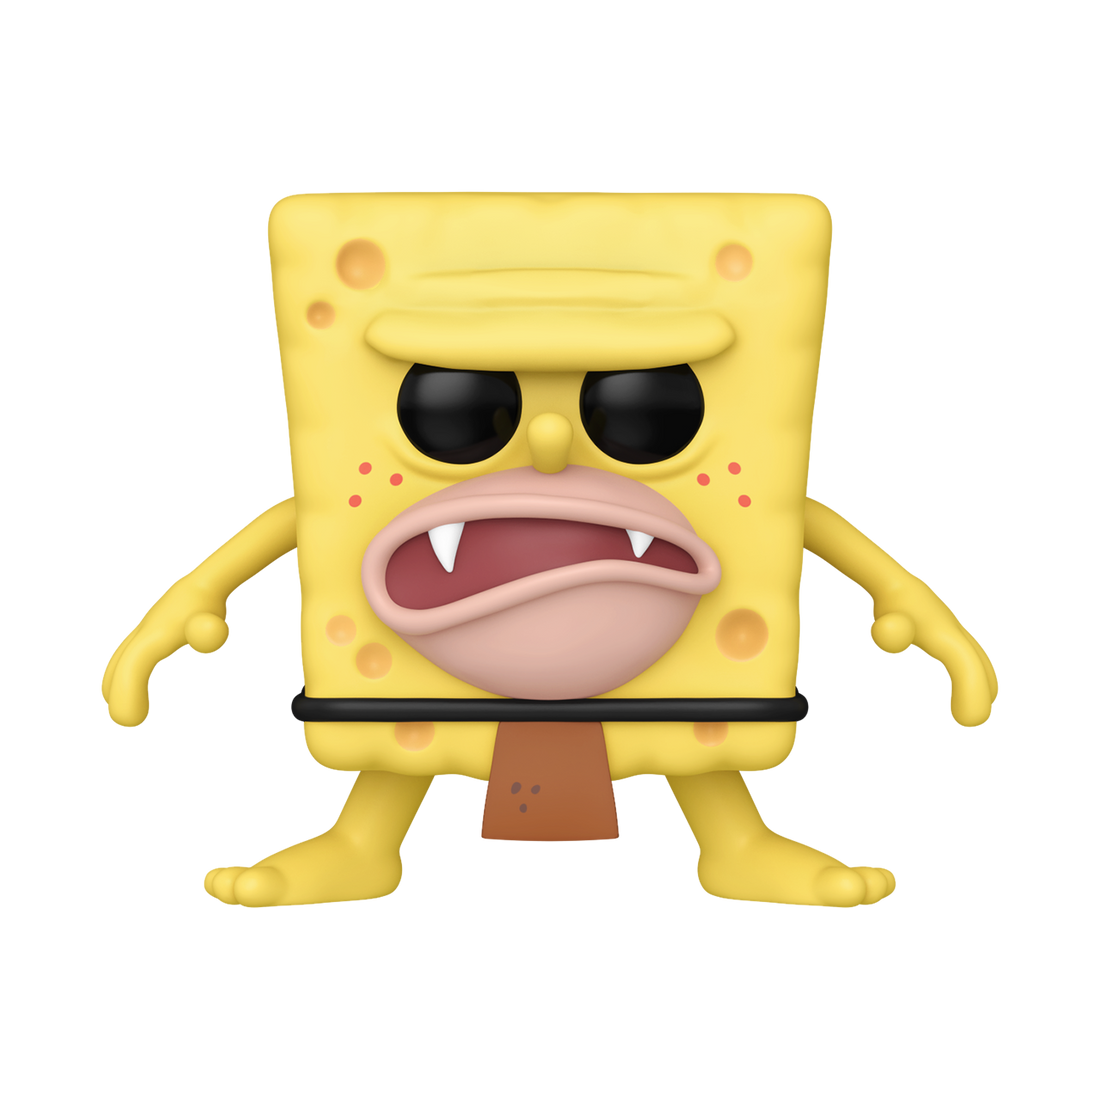 Funko Pop! Animation SpongeBob SquarePants 1669 Caveman SpongeBob Funko